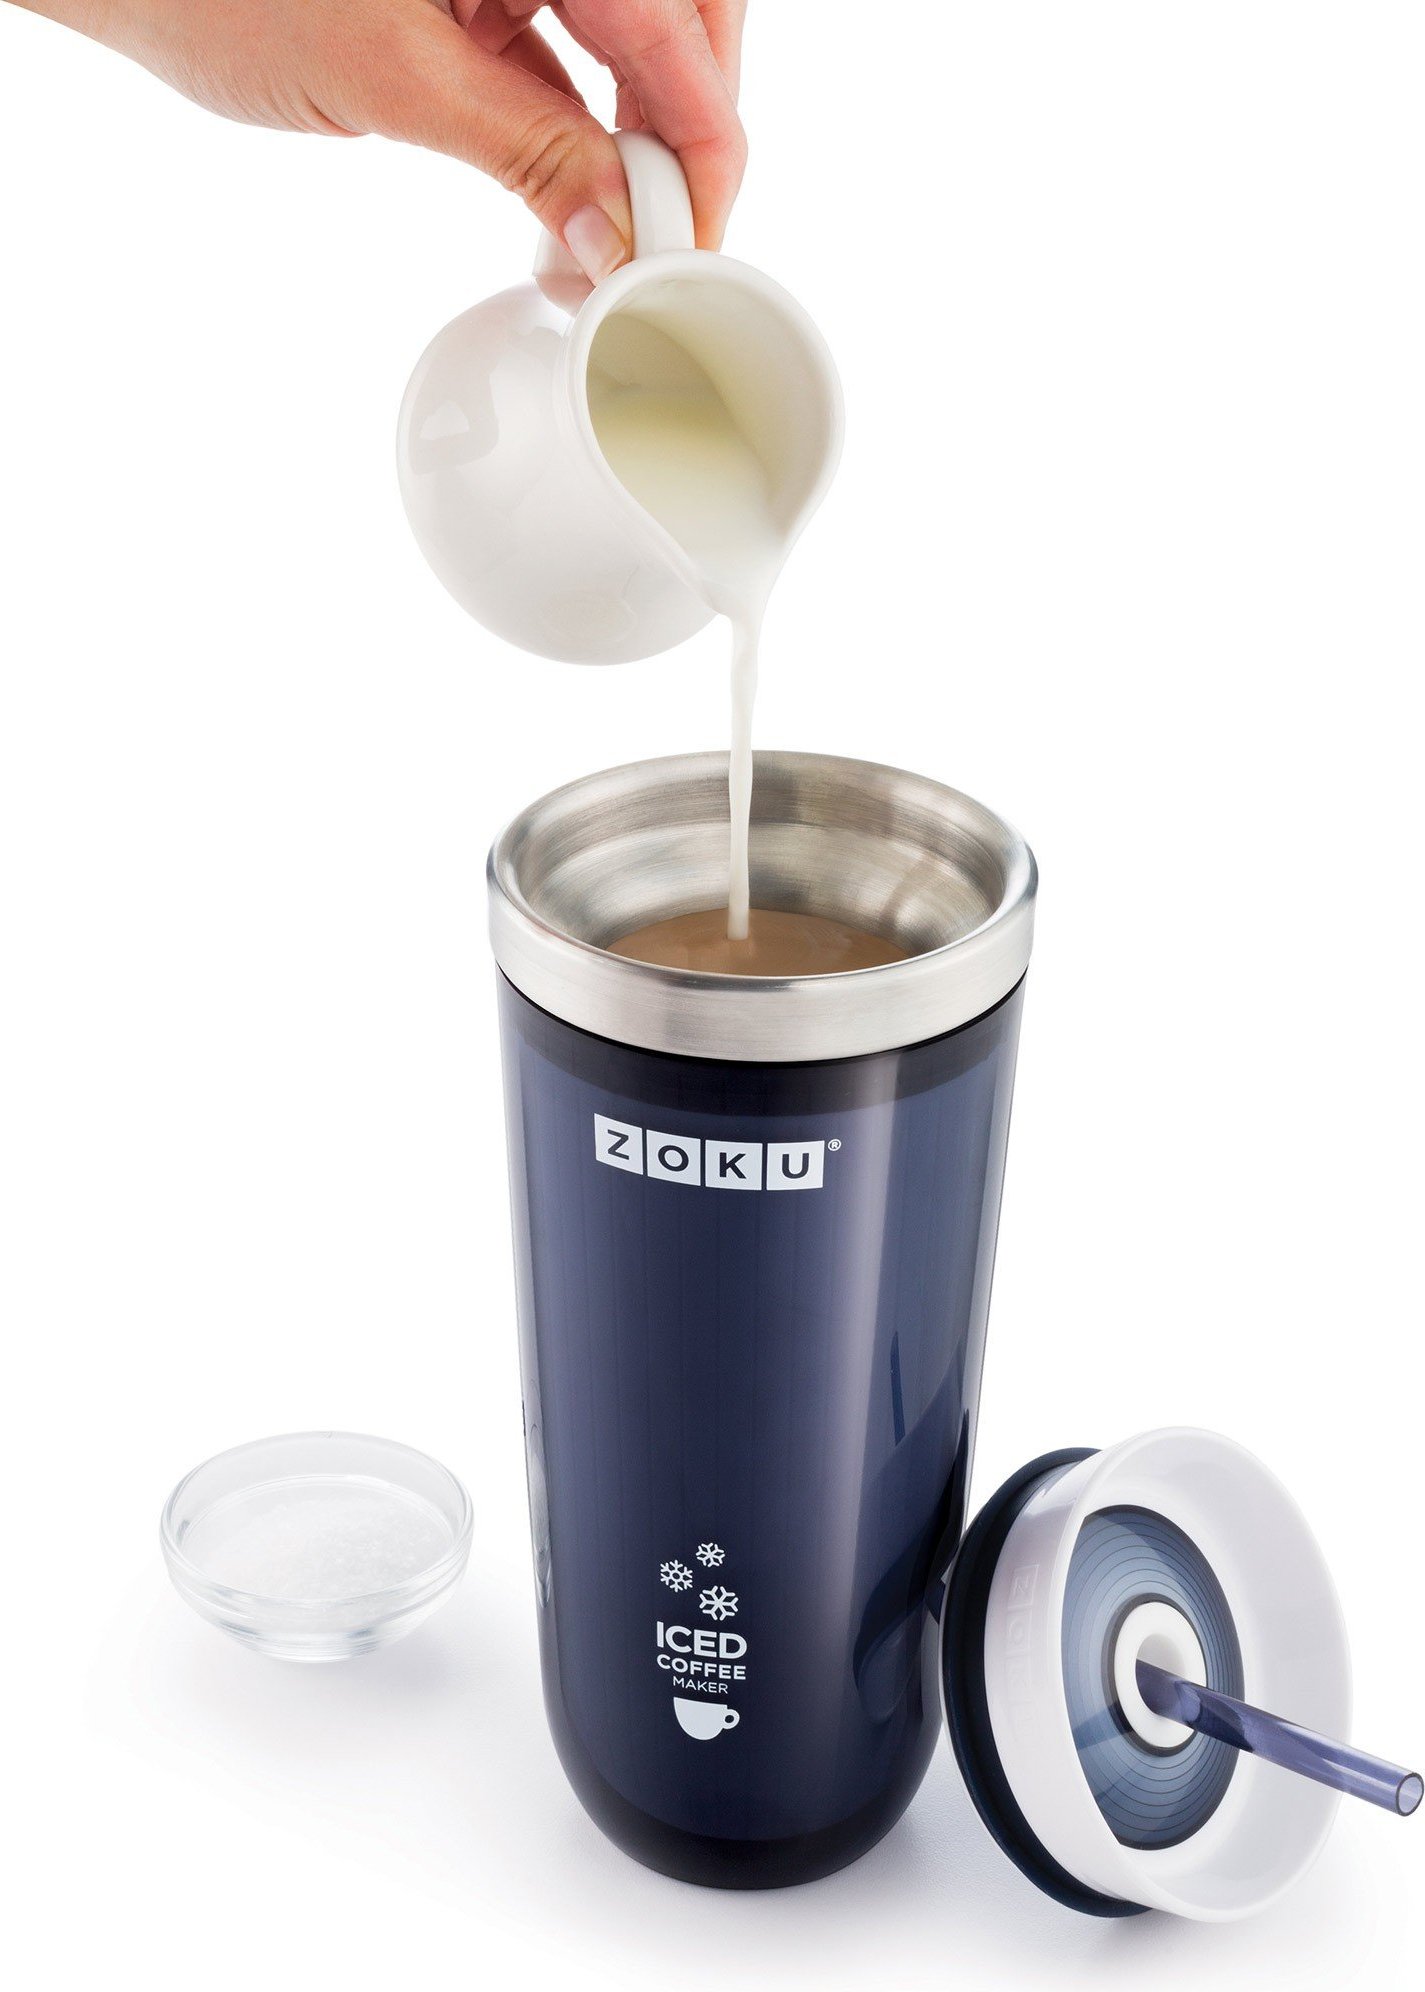 https://3fa-media.com/zoku/zoku-iced-coffee-maker-mug-for-iced-coffee-or-tea__zk121-gy-3-s2500x2500.jpg